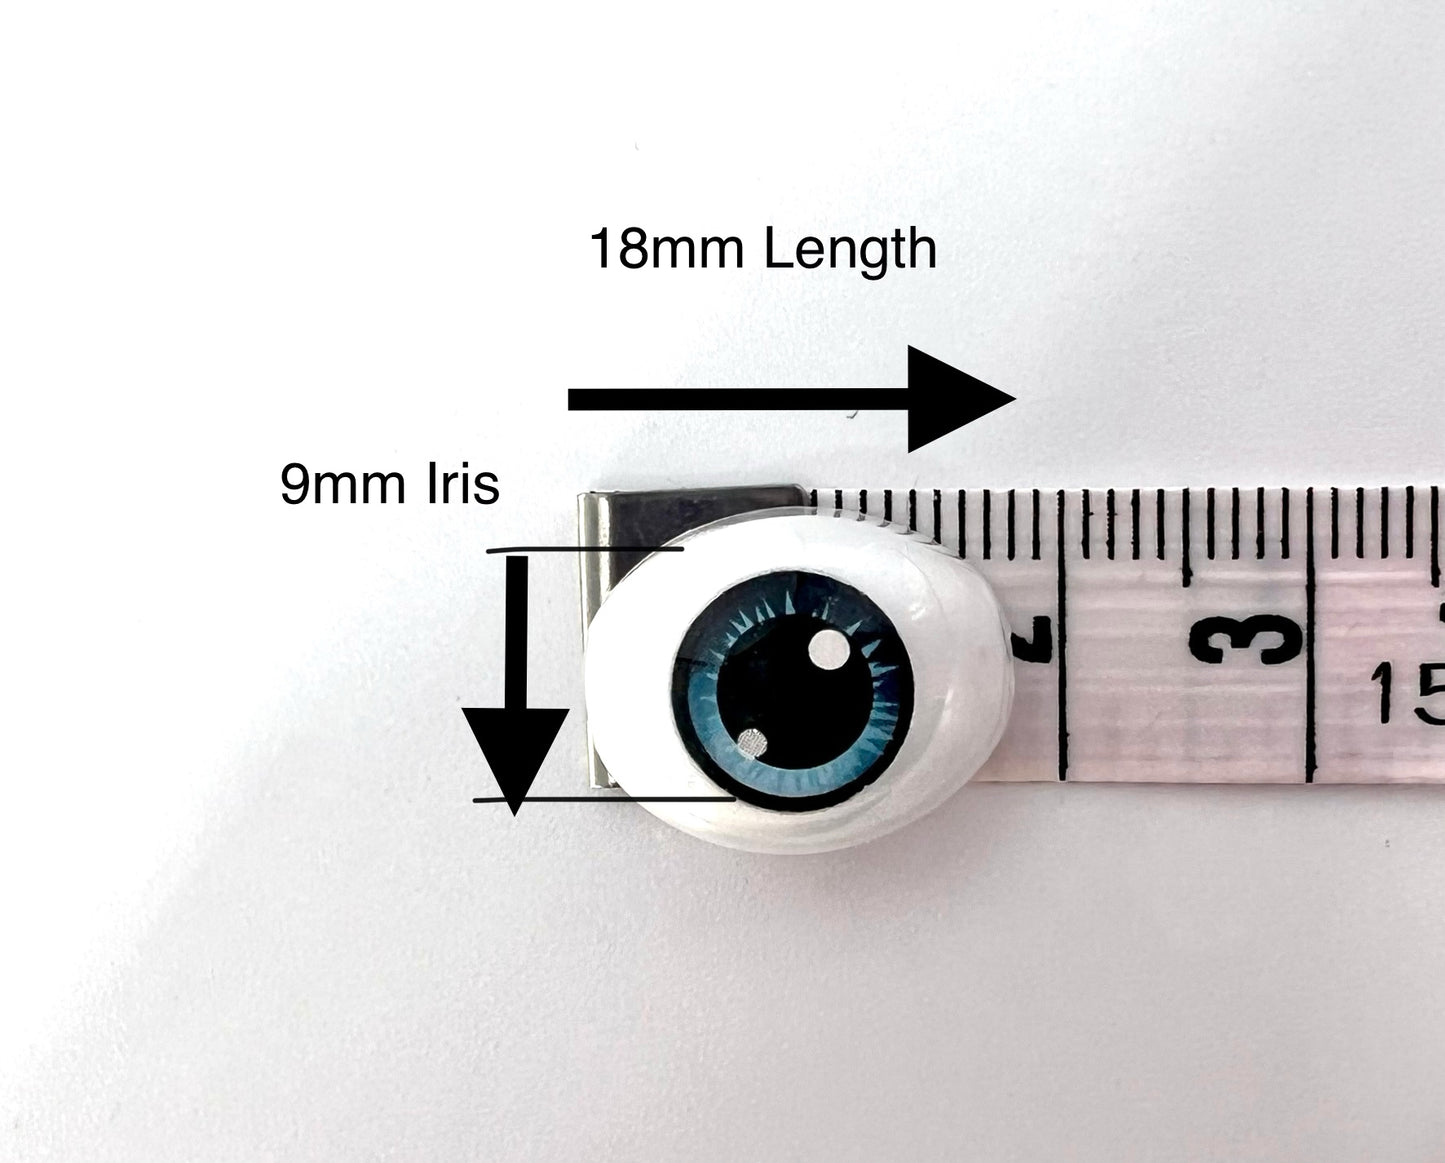 Turquoise Blue Oval Eye for Smart Doll, BJD 18mm Length